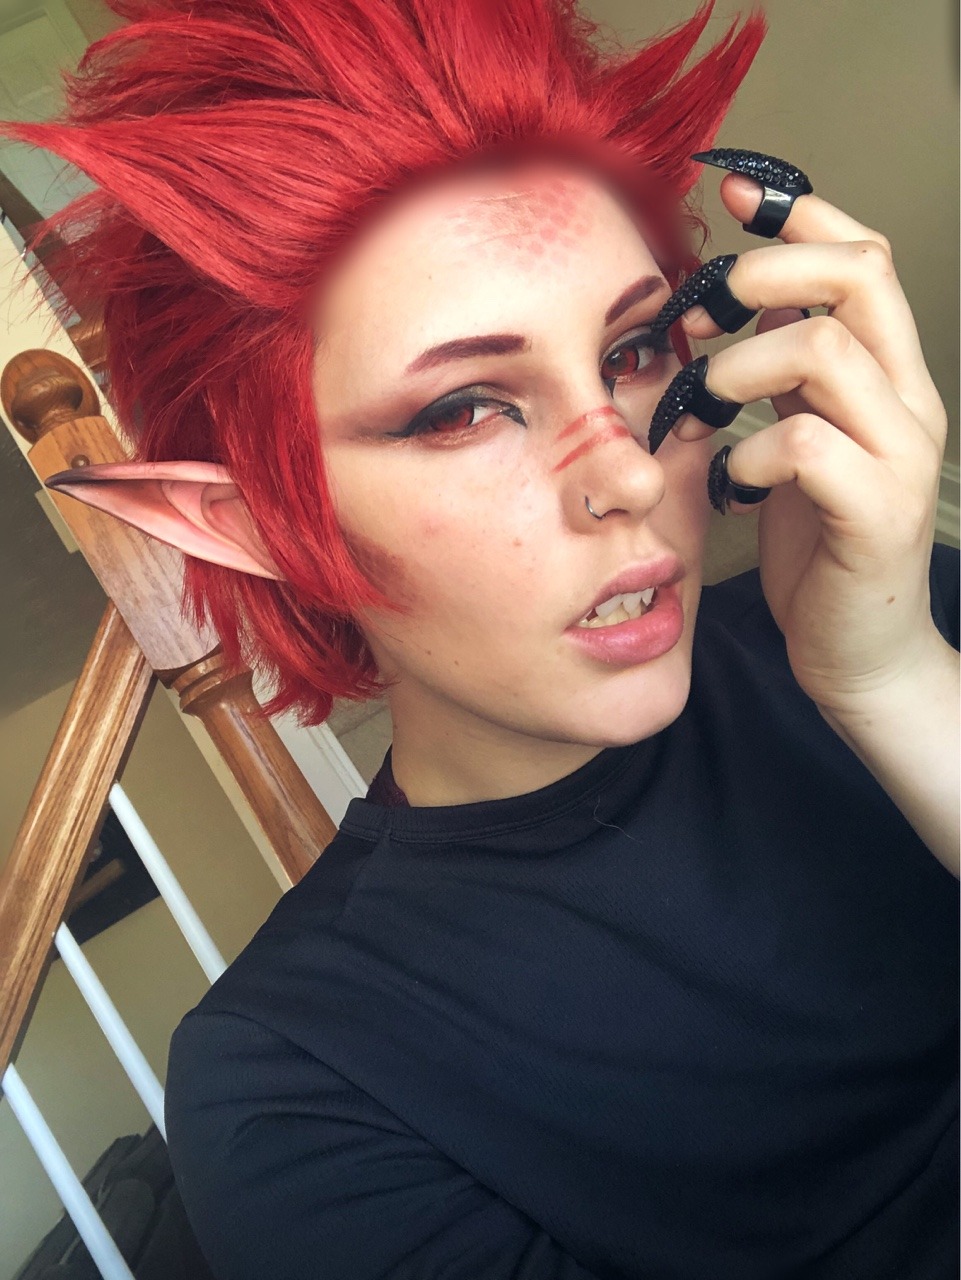 organisere Hele tiden udvikle Makeup test run for dragon Kirishima for ren faire... - Hey! Hey! Heyyyy!!!